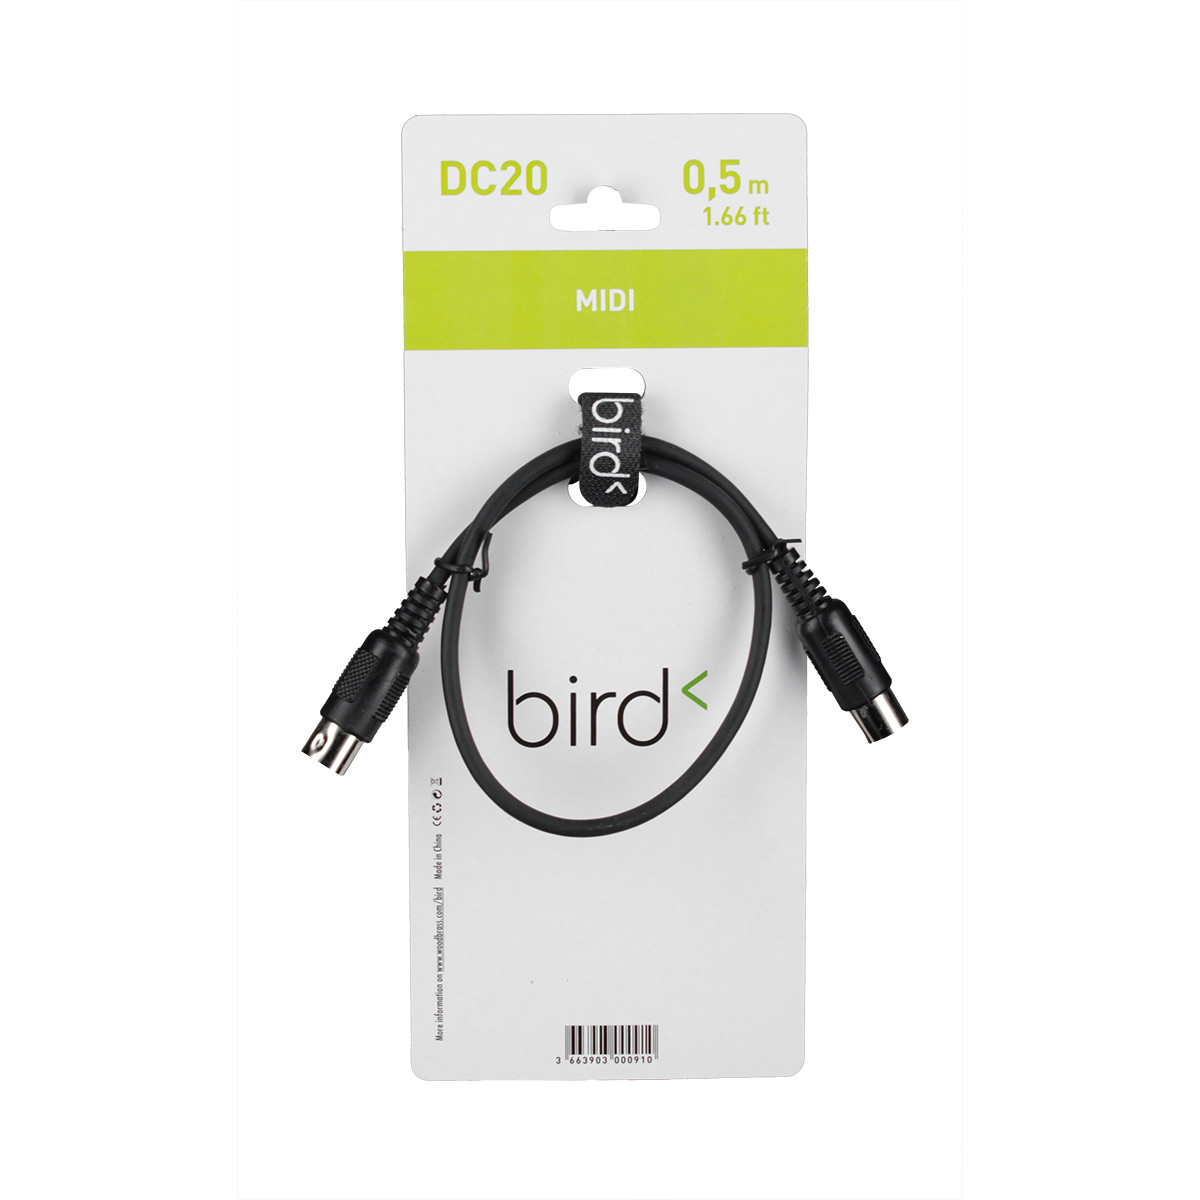 BIRD DC20 - MIDI - 0,5M